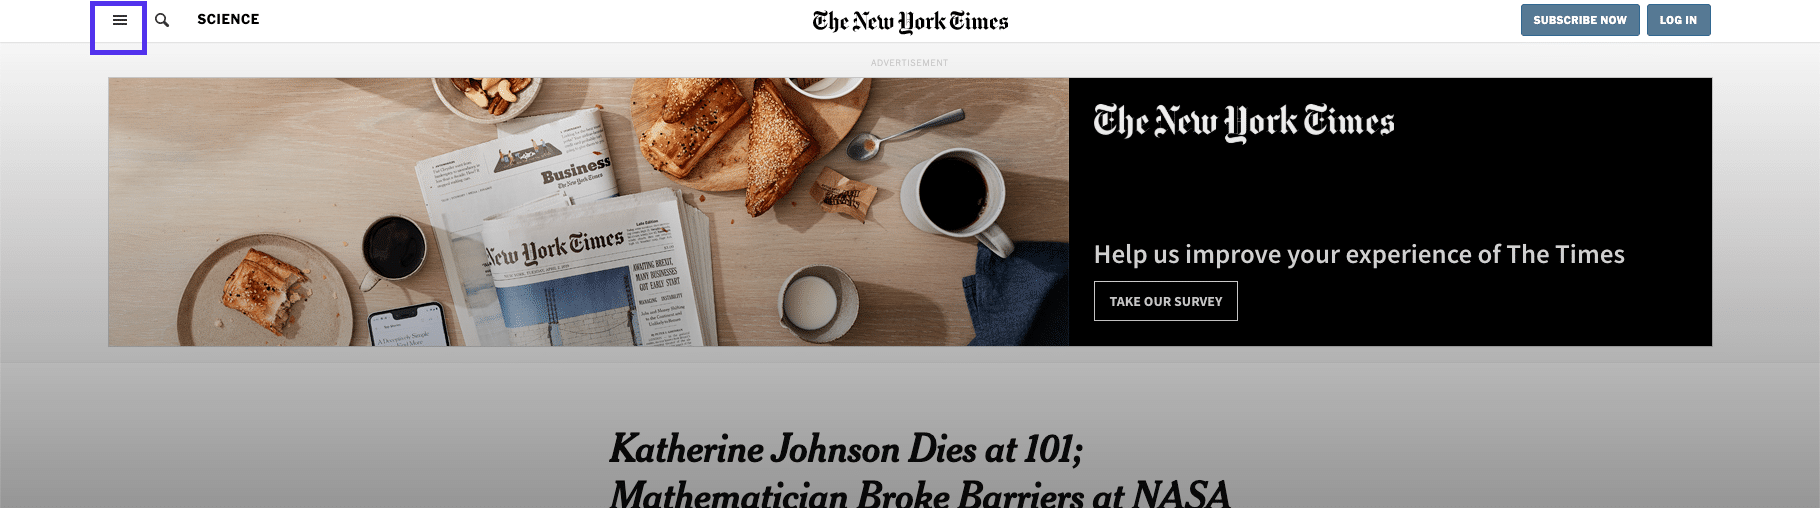 website navigation examples form NYT